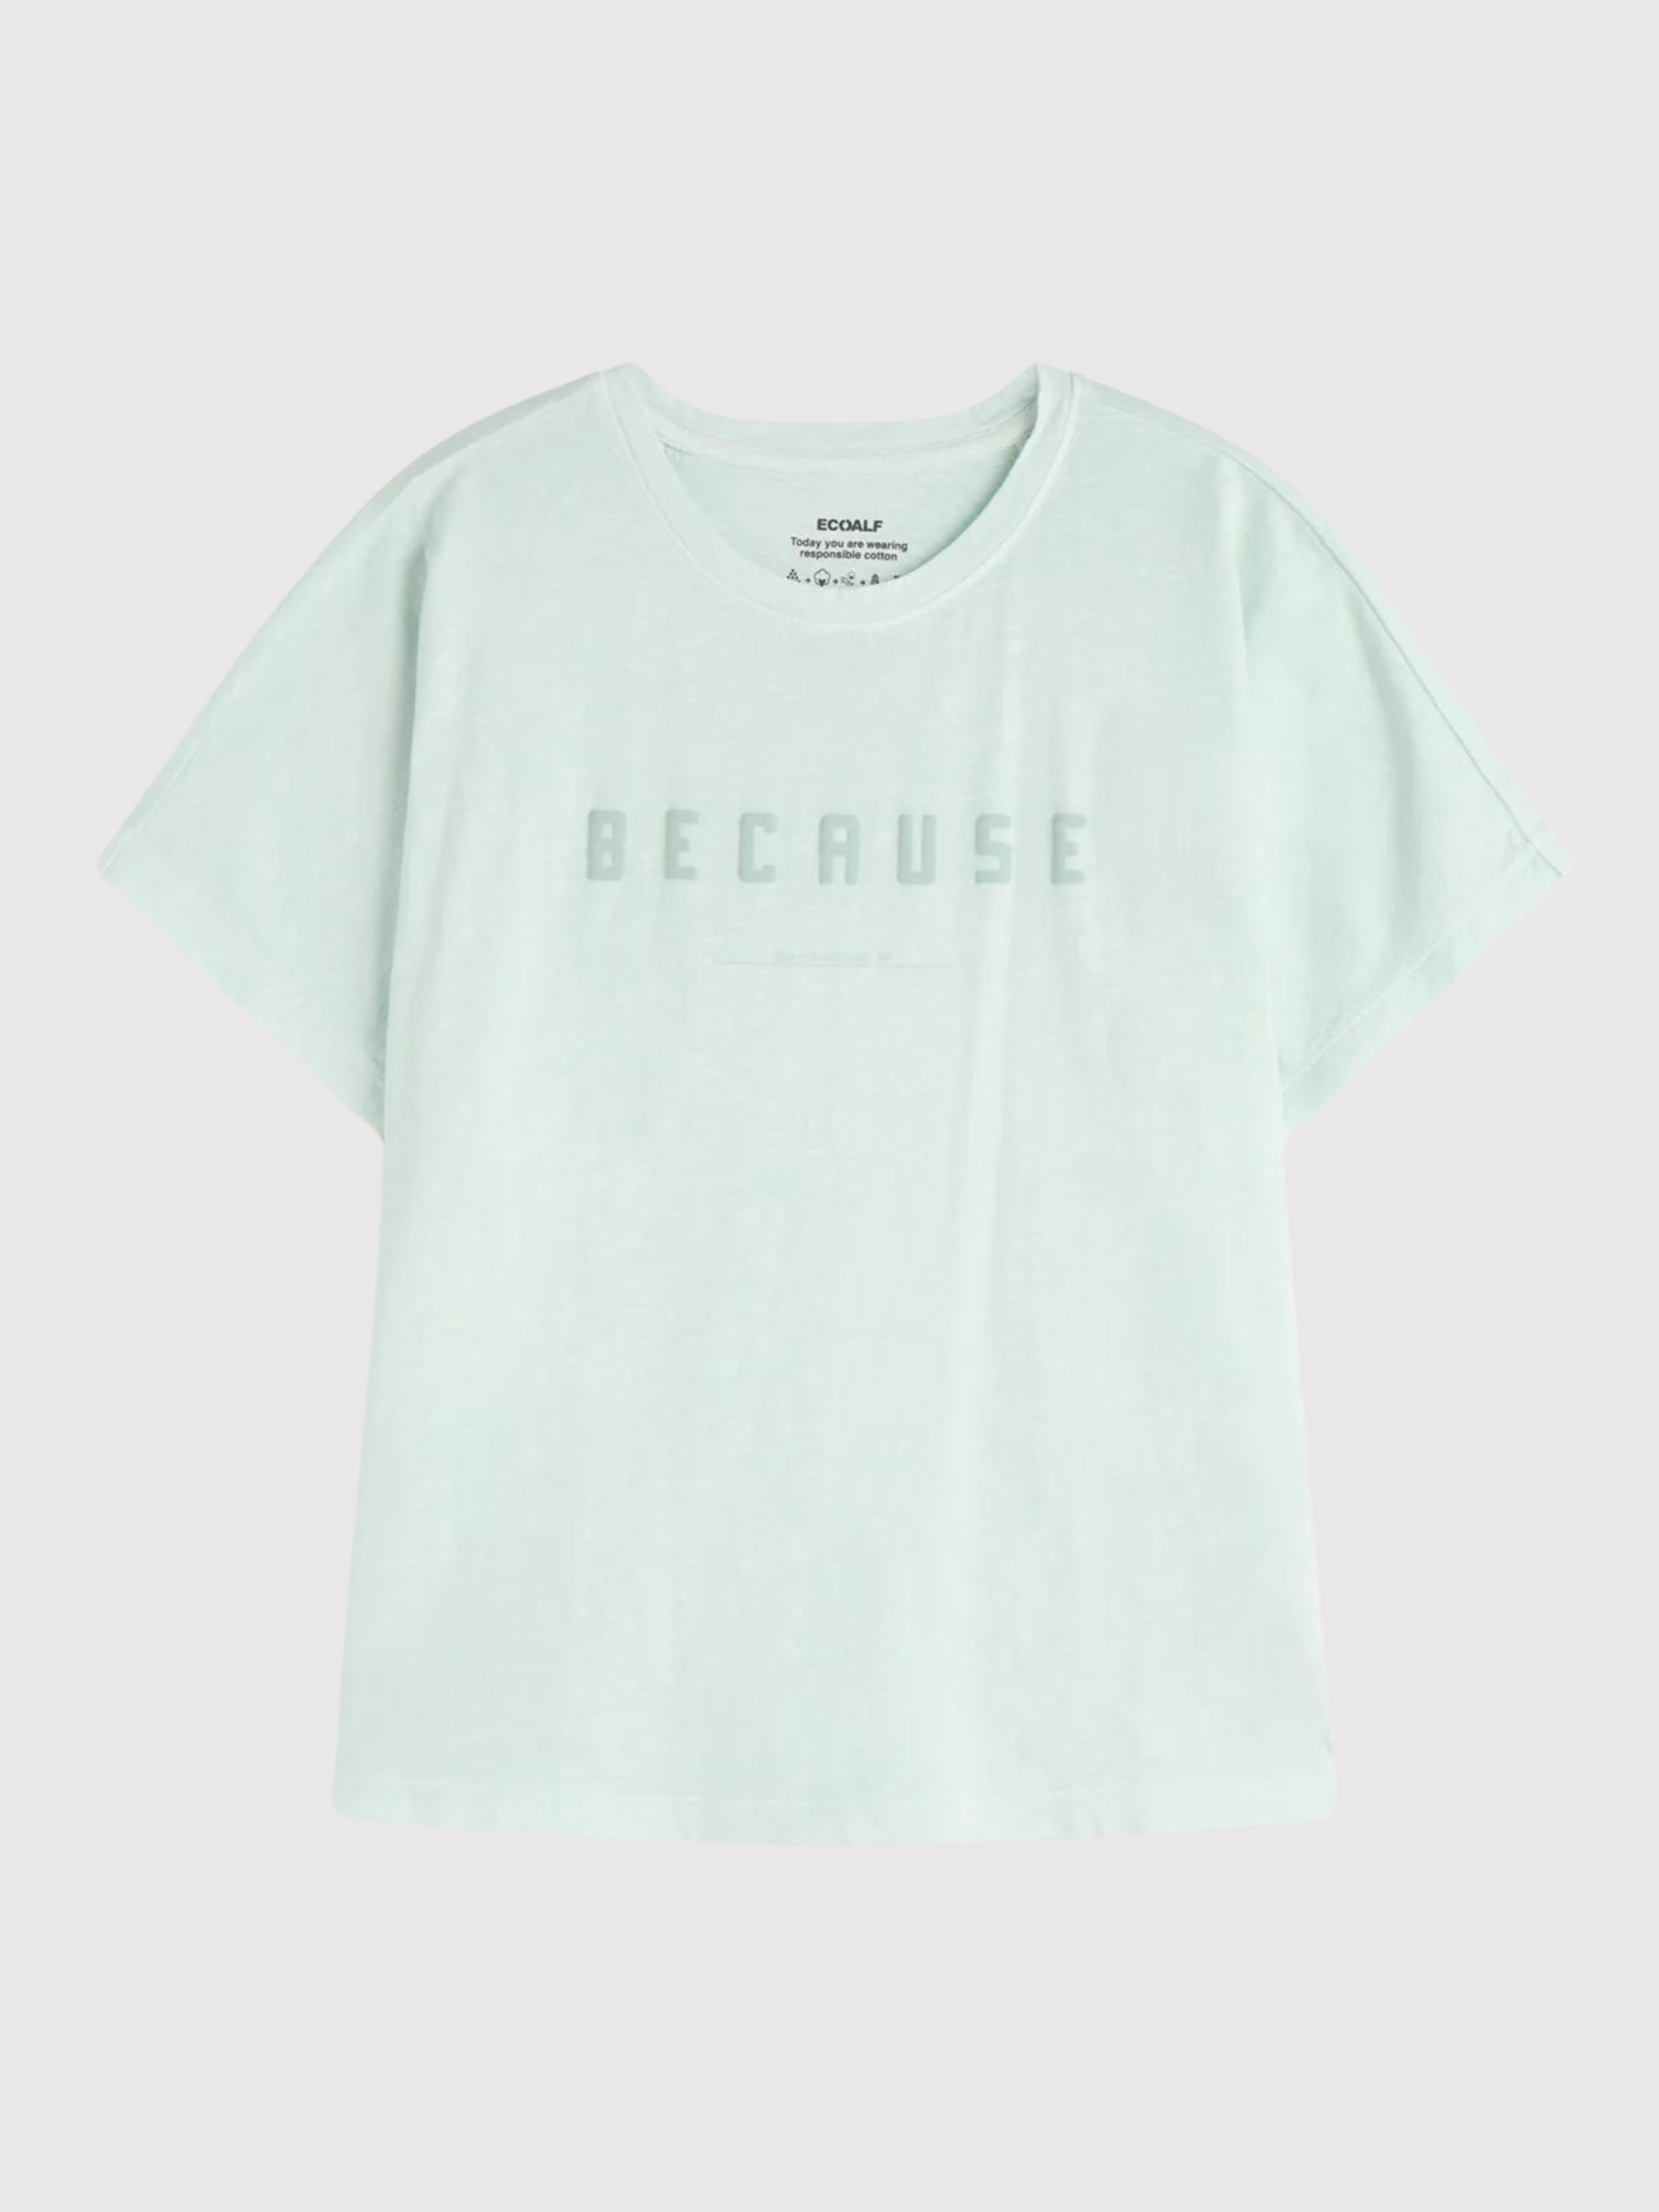 T-Shirt Kemi Light Blue in Organic Cotton | Ecoalf